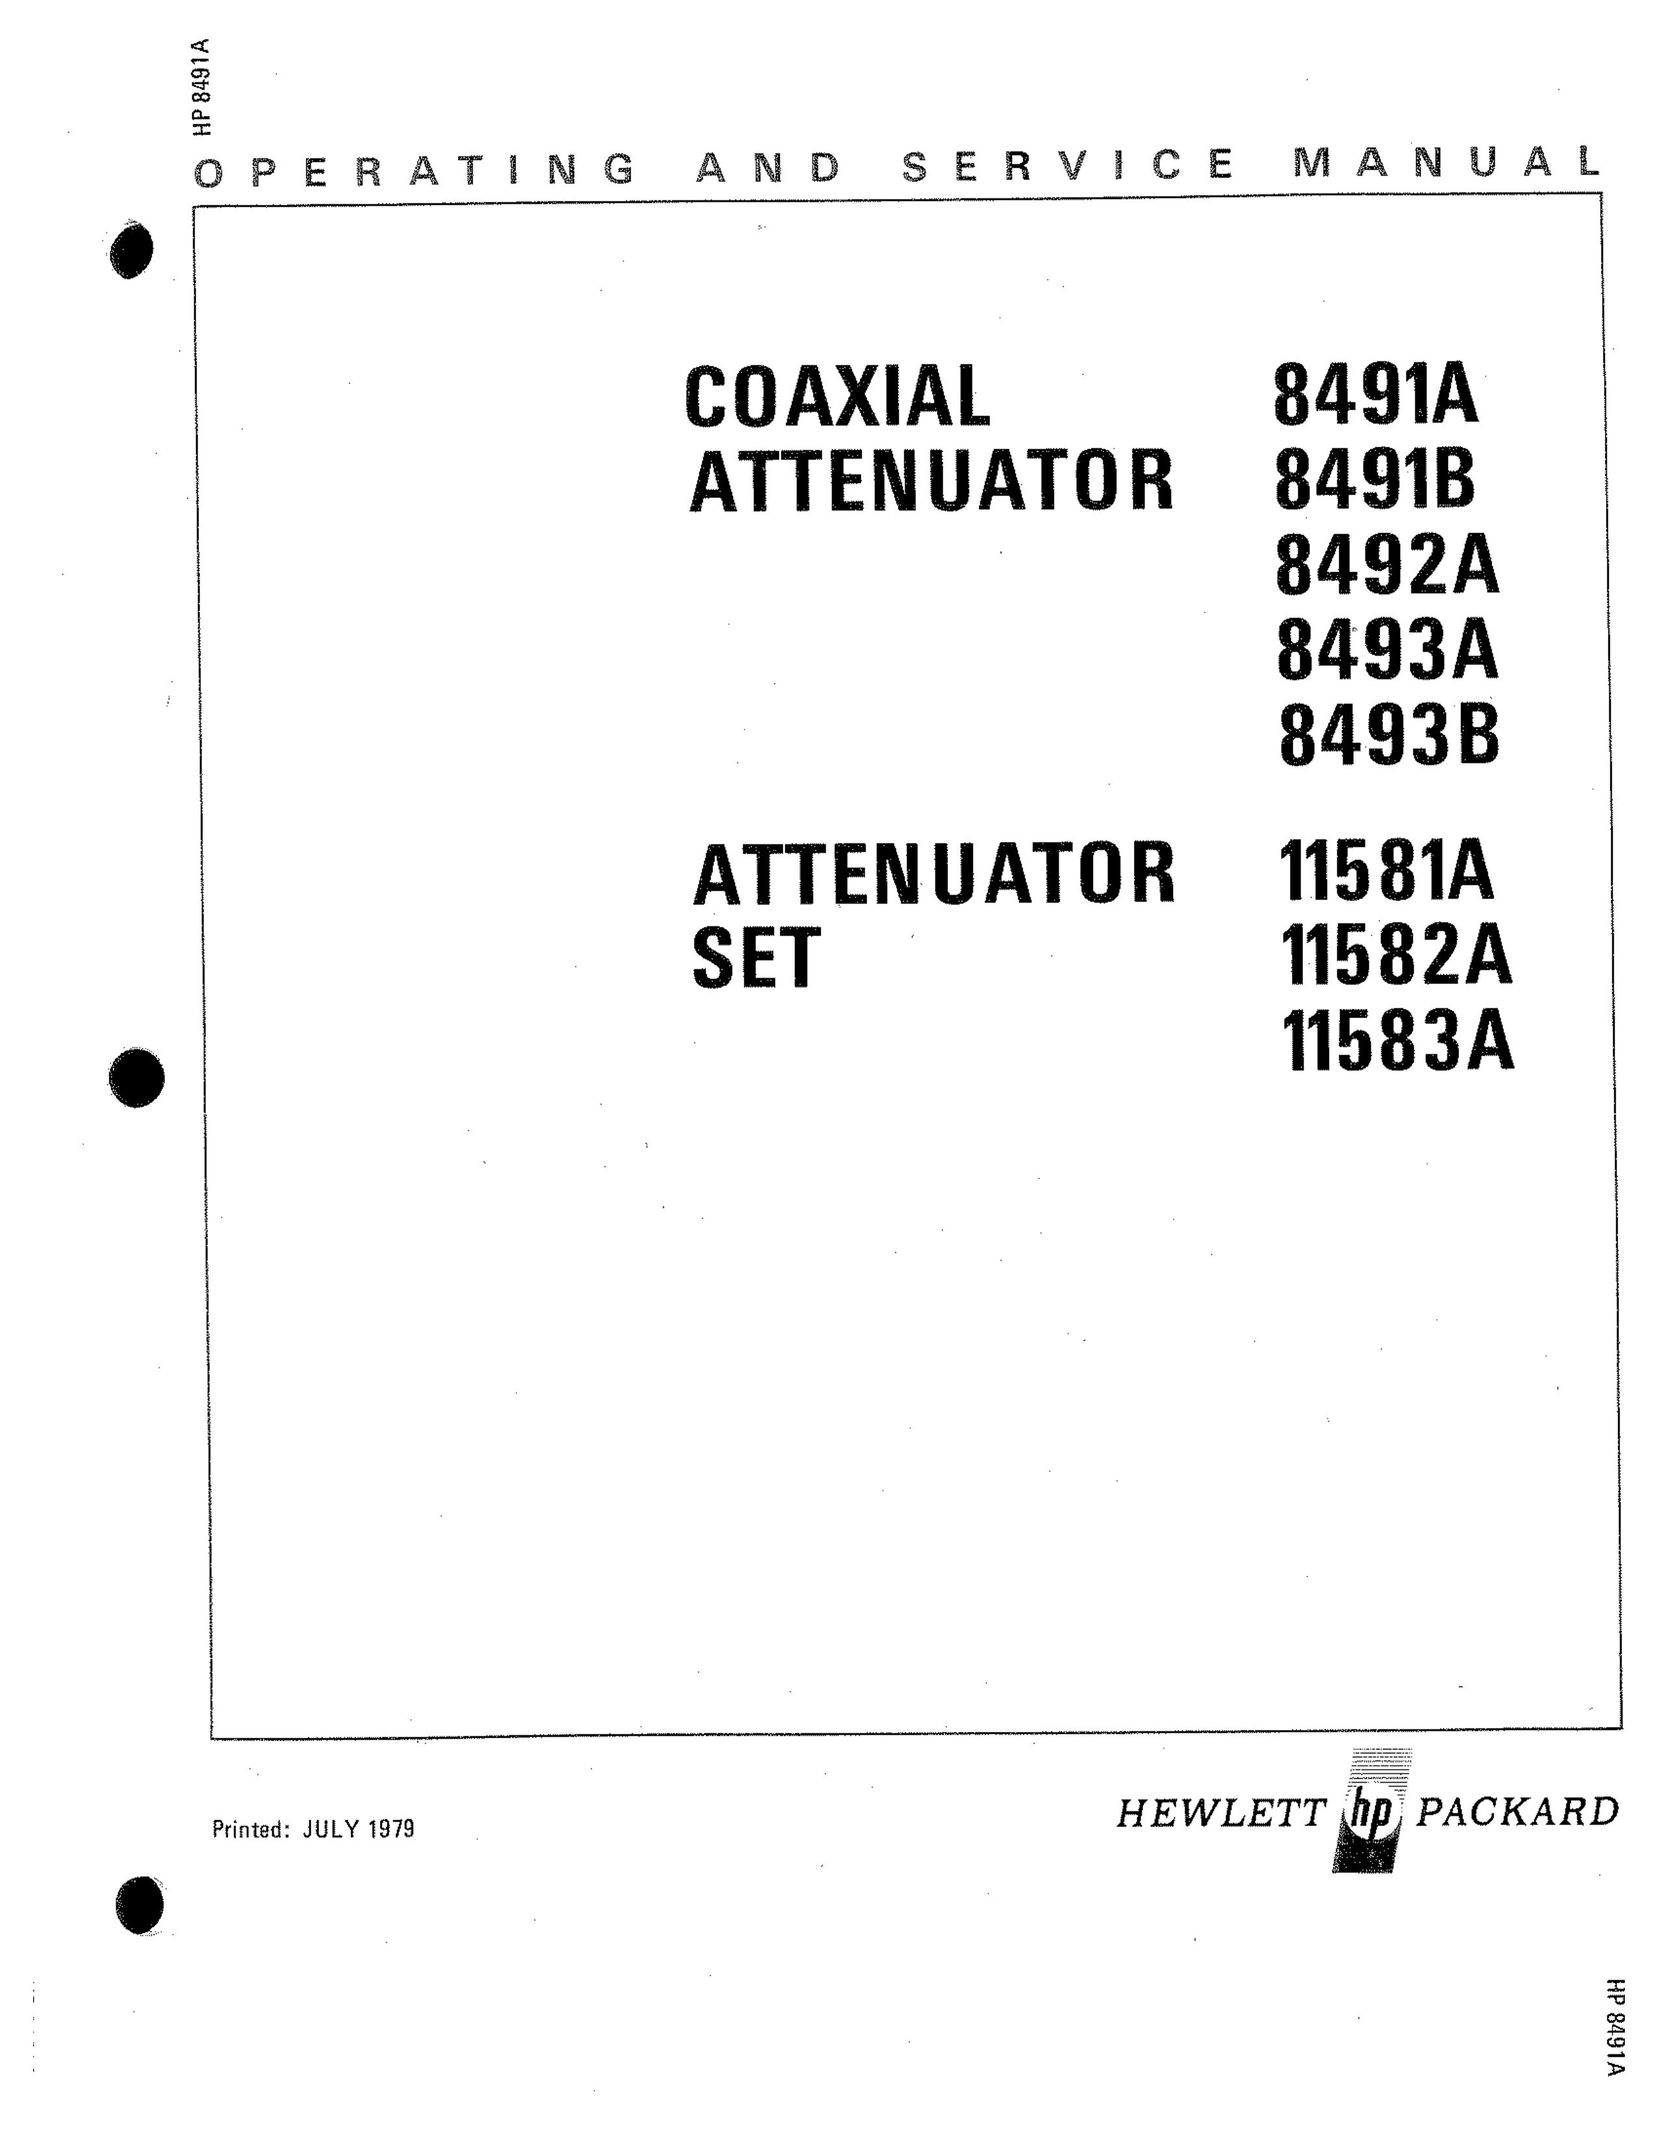 HP (Hewlett-Packard) 8491A TV Cables User Manual